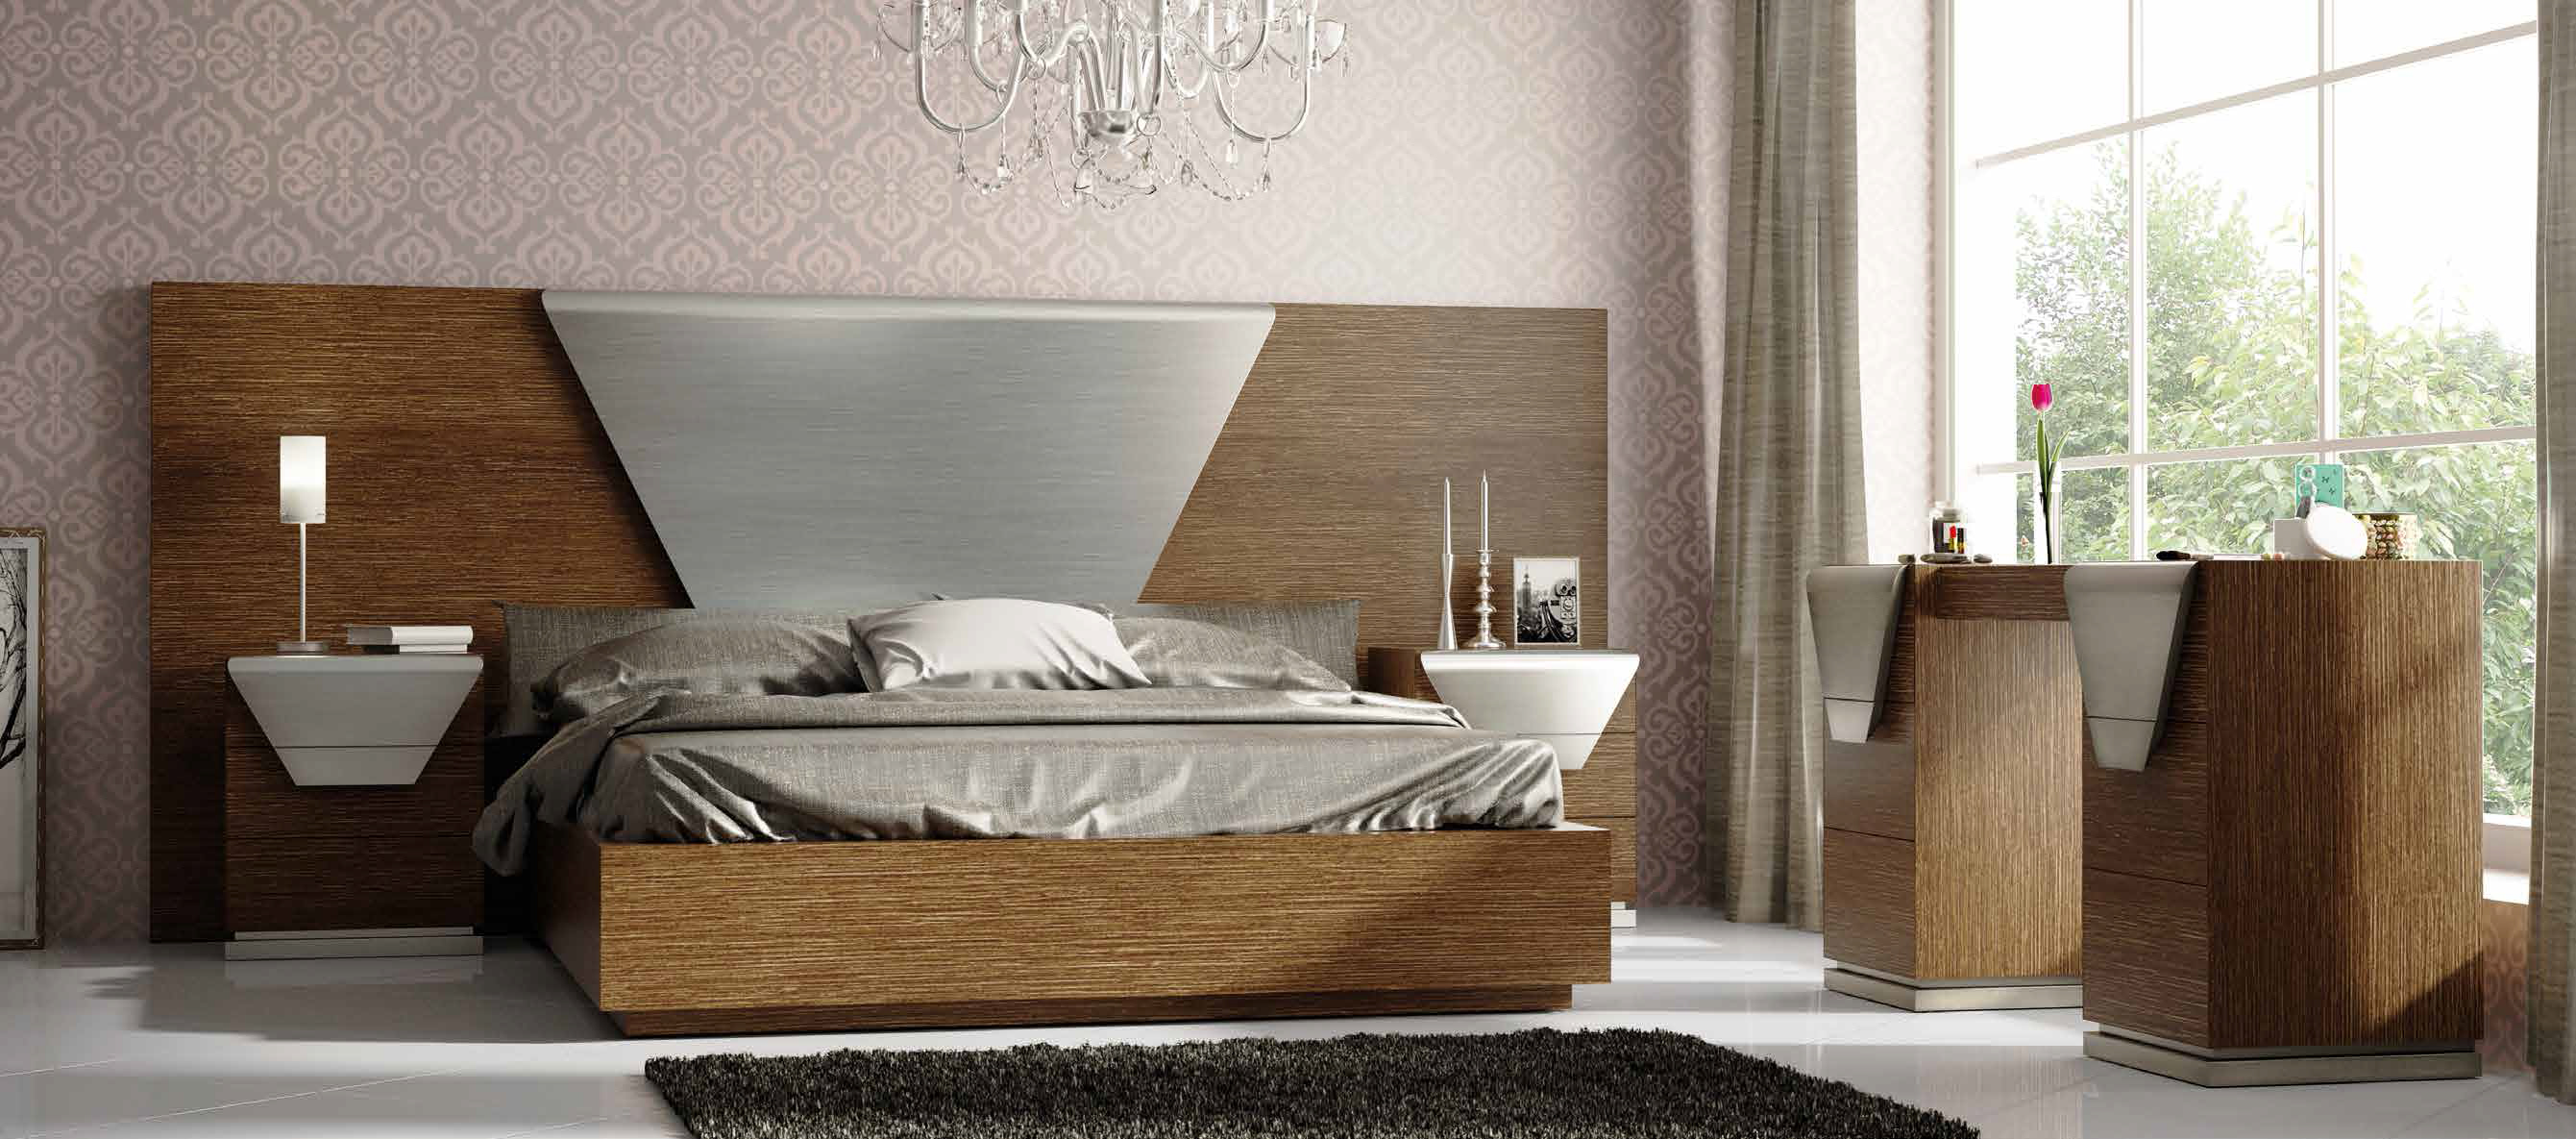 Brands Franco Furniture Bedrooms vol2, Spain DOR 86